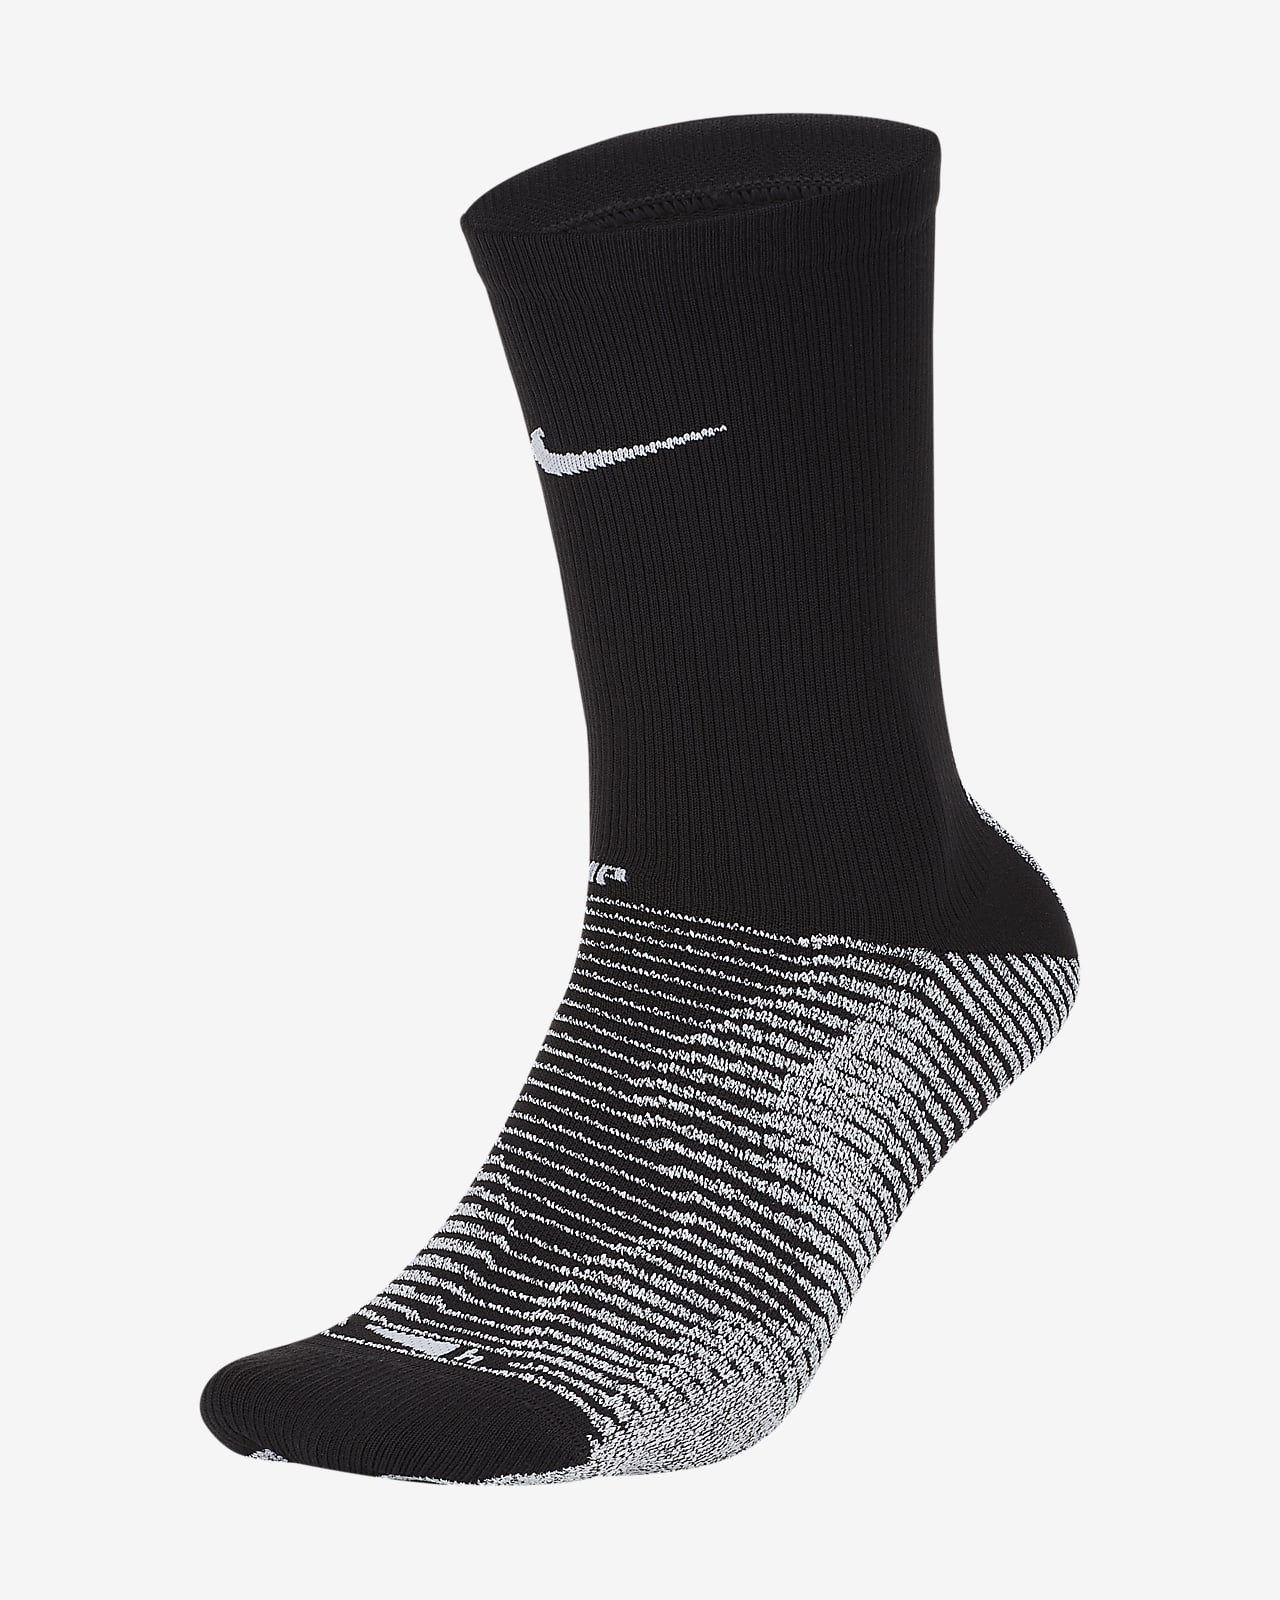 nike grip socks basketball